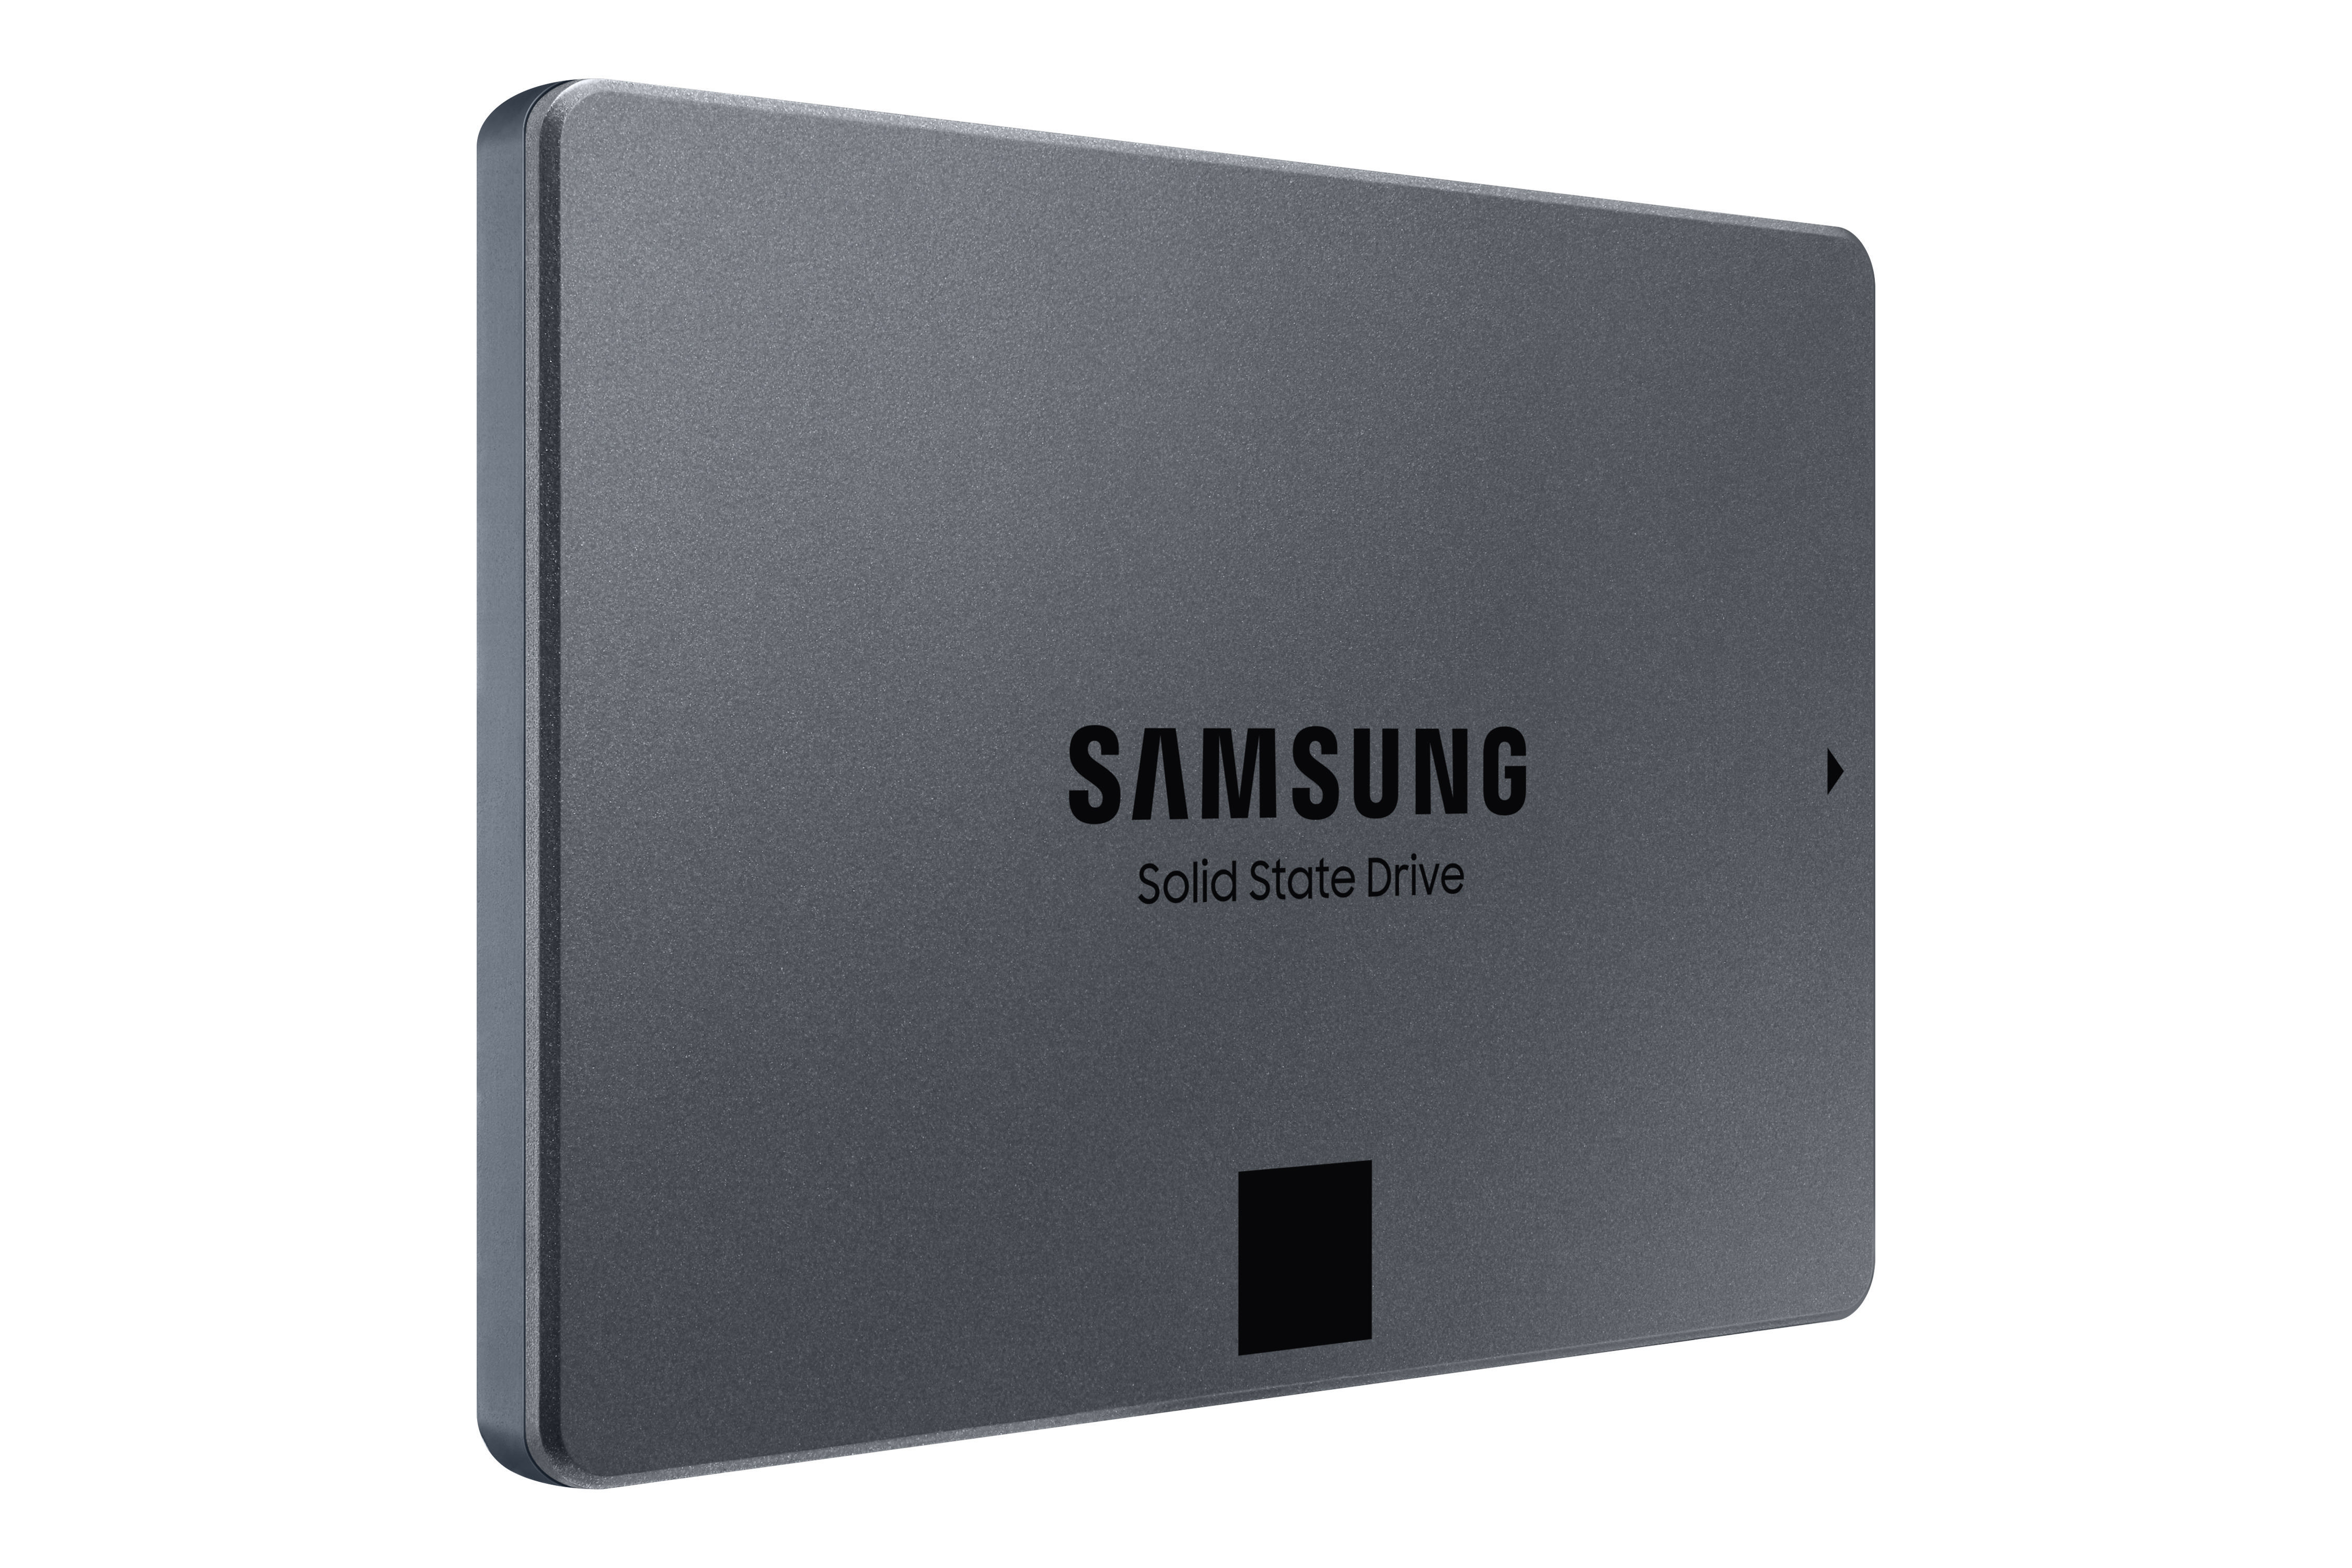 SAMSUNG 870 QVO Festplatte Retail, TB SSD Gbps, 2,5 Zoll, intern 6 2 SATA